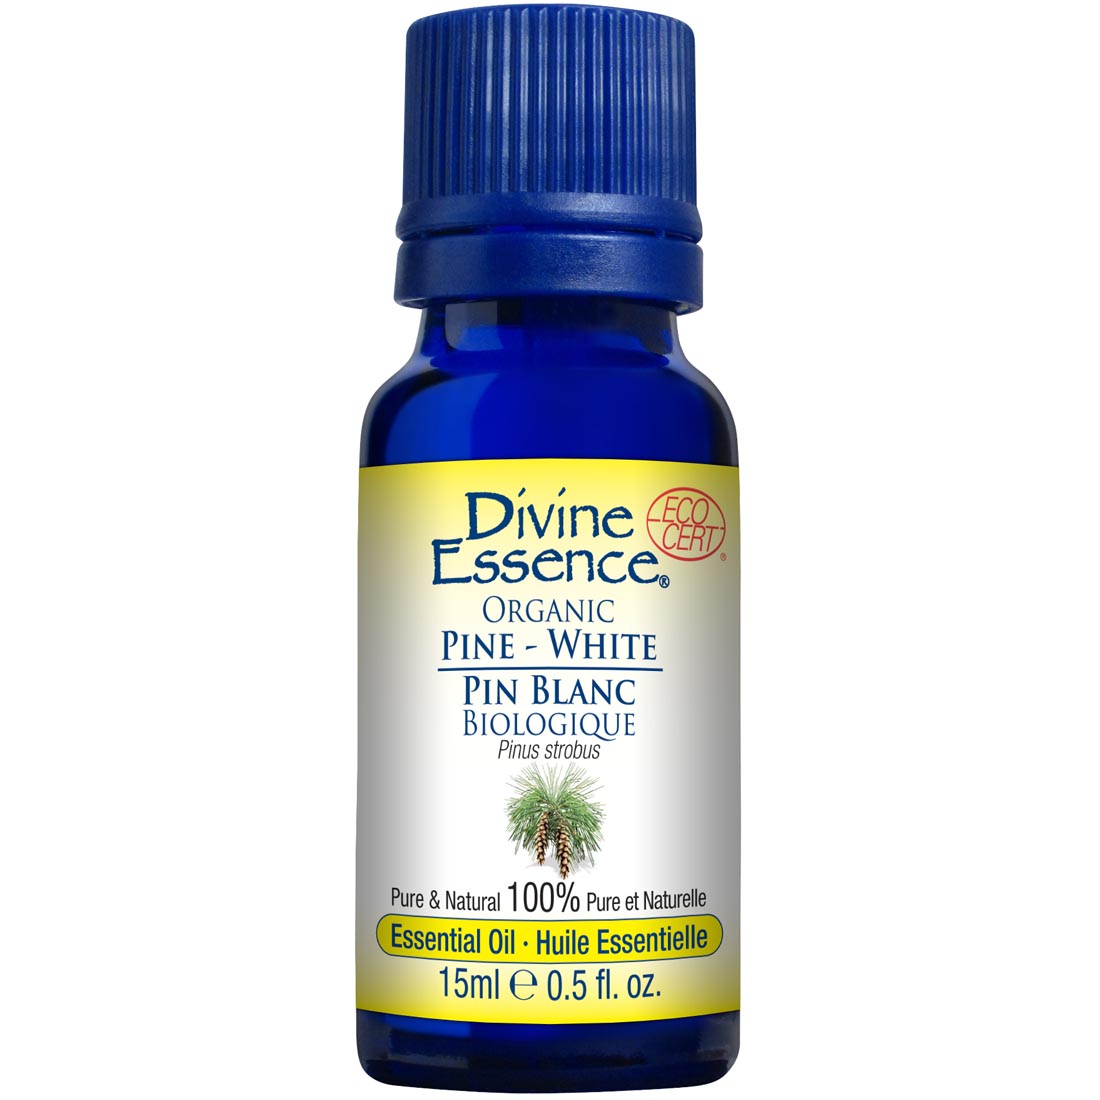 Divine Essence Pine - White Essential Oil (Organic), 15ml